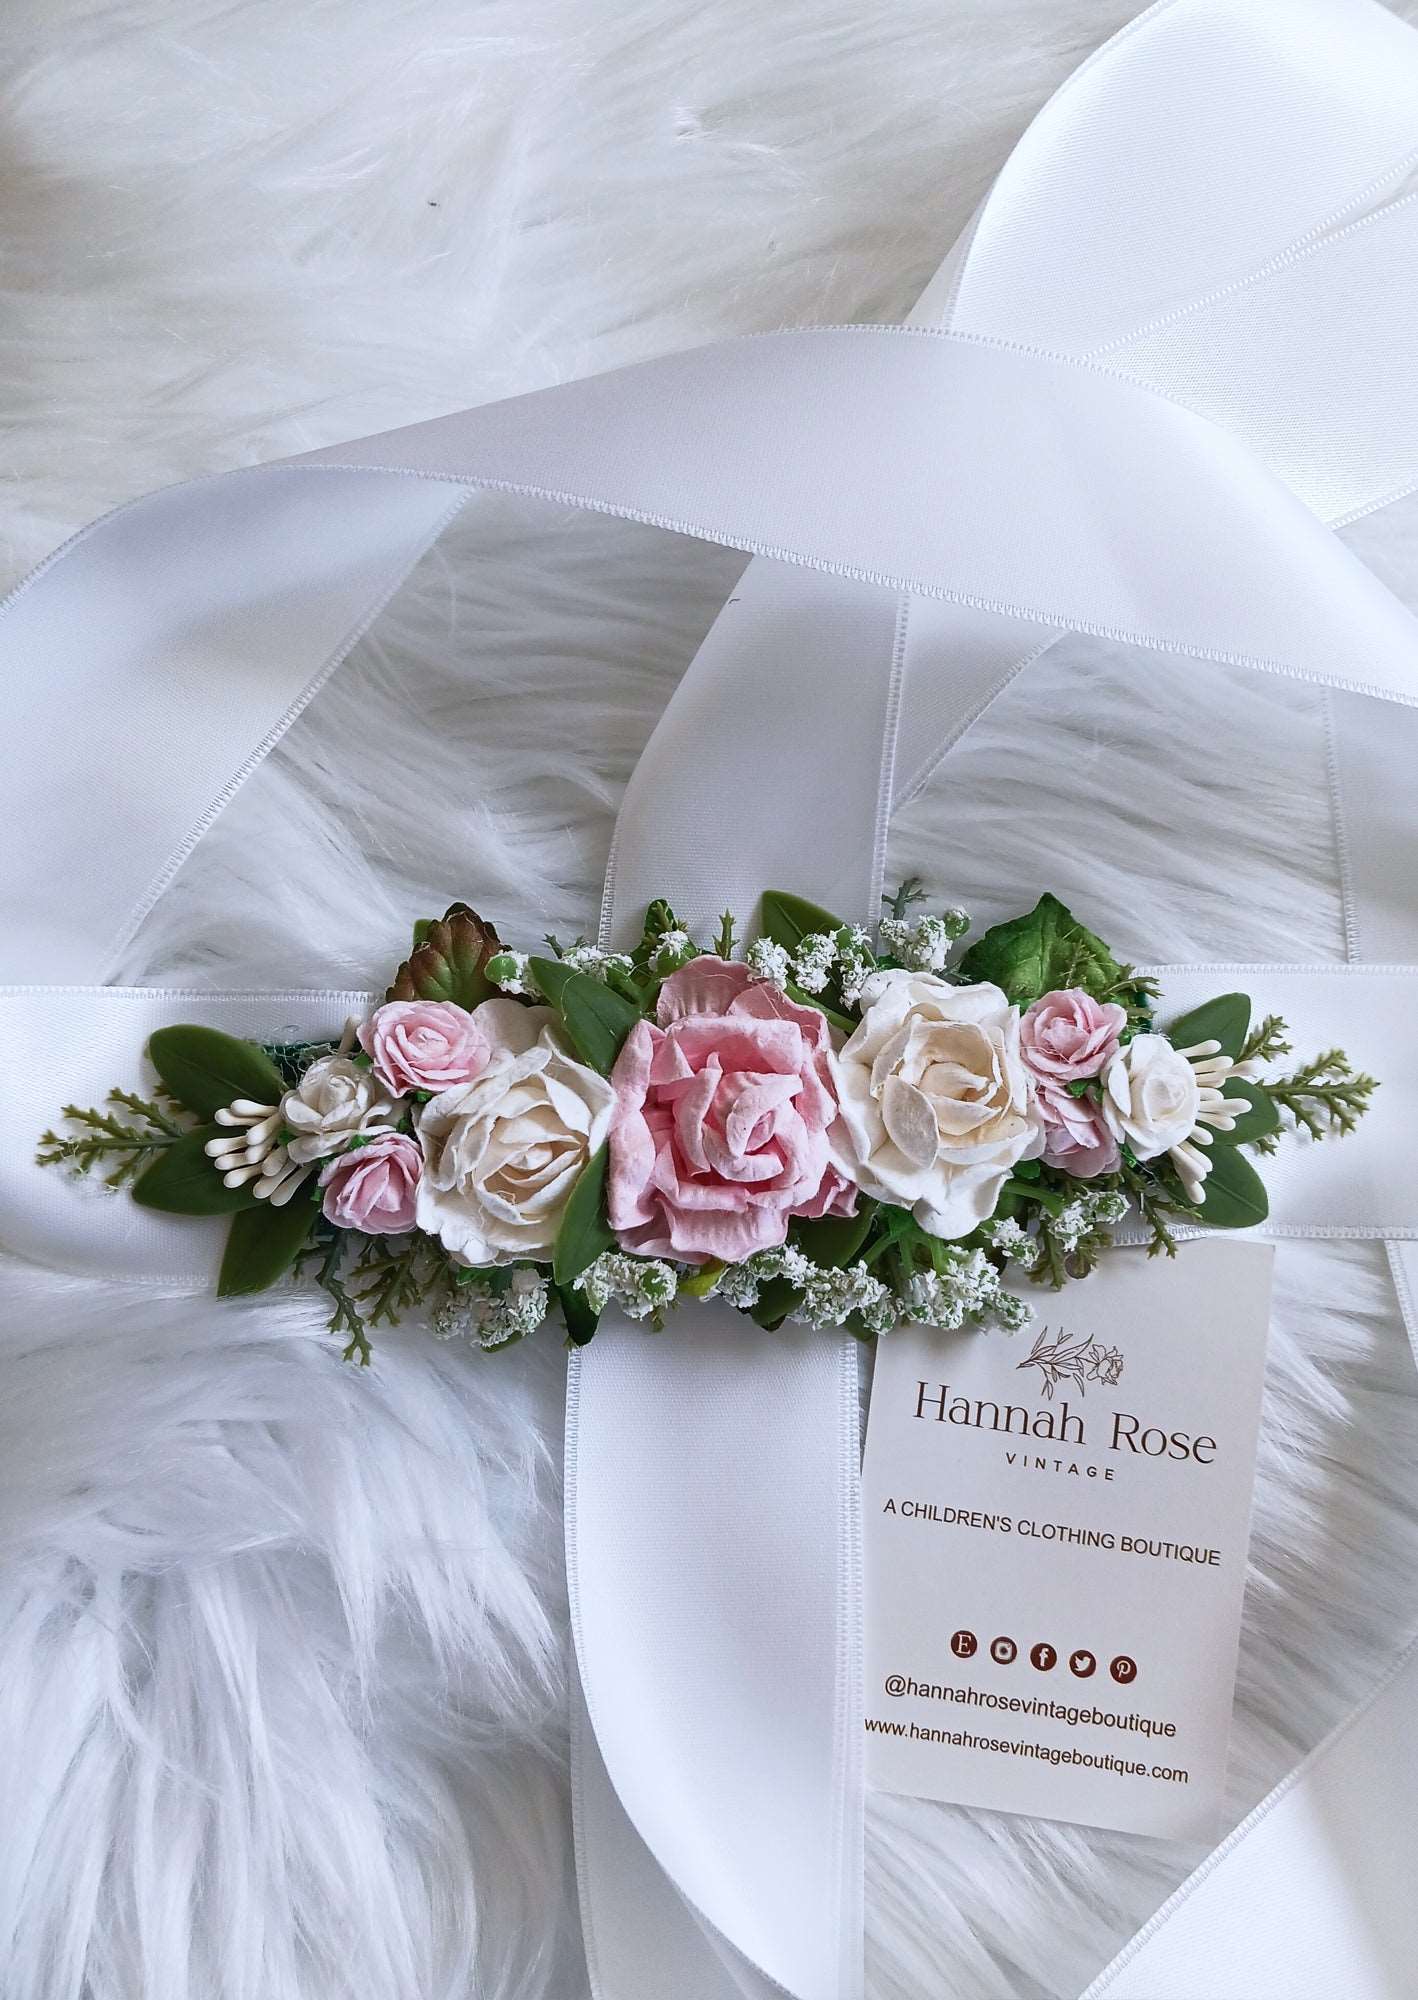 Flower sash, wedding sash, pink flower sash, bridal sash, sash belt, flower girl dress sash